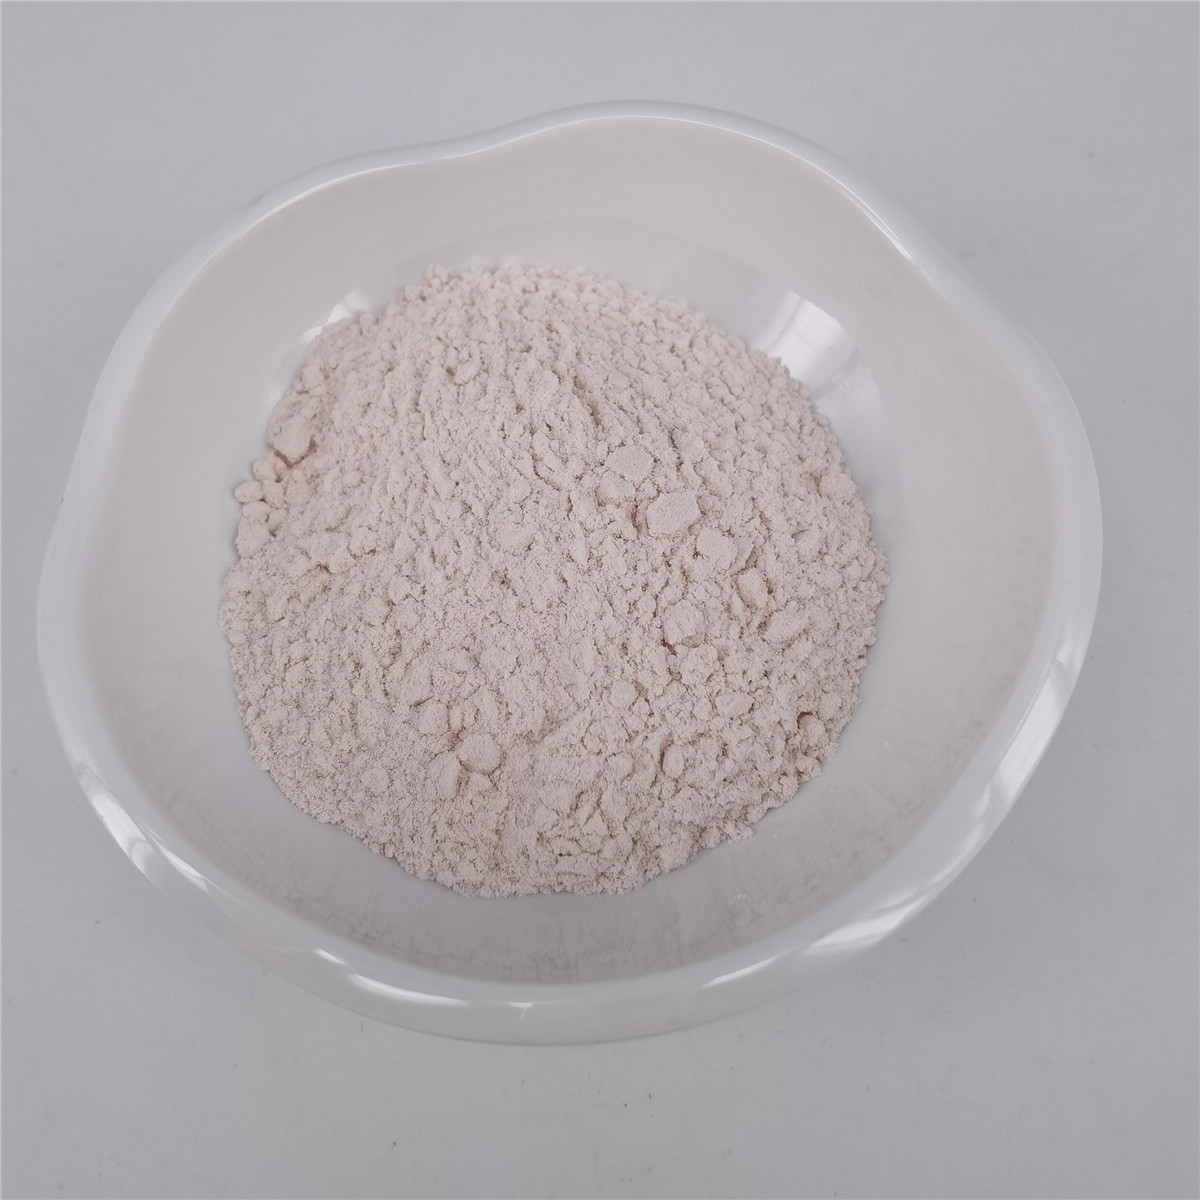  Phamaceutical EINECS 232 943 0 Superoxide Dismutase Powder With Enzyme Activity 50000iu/g Manufactures